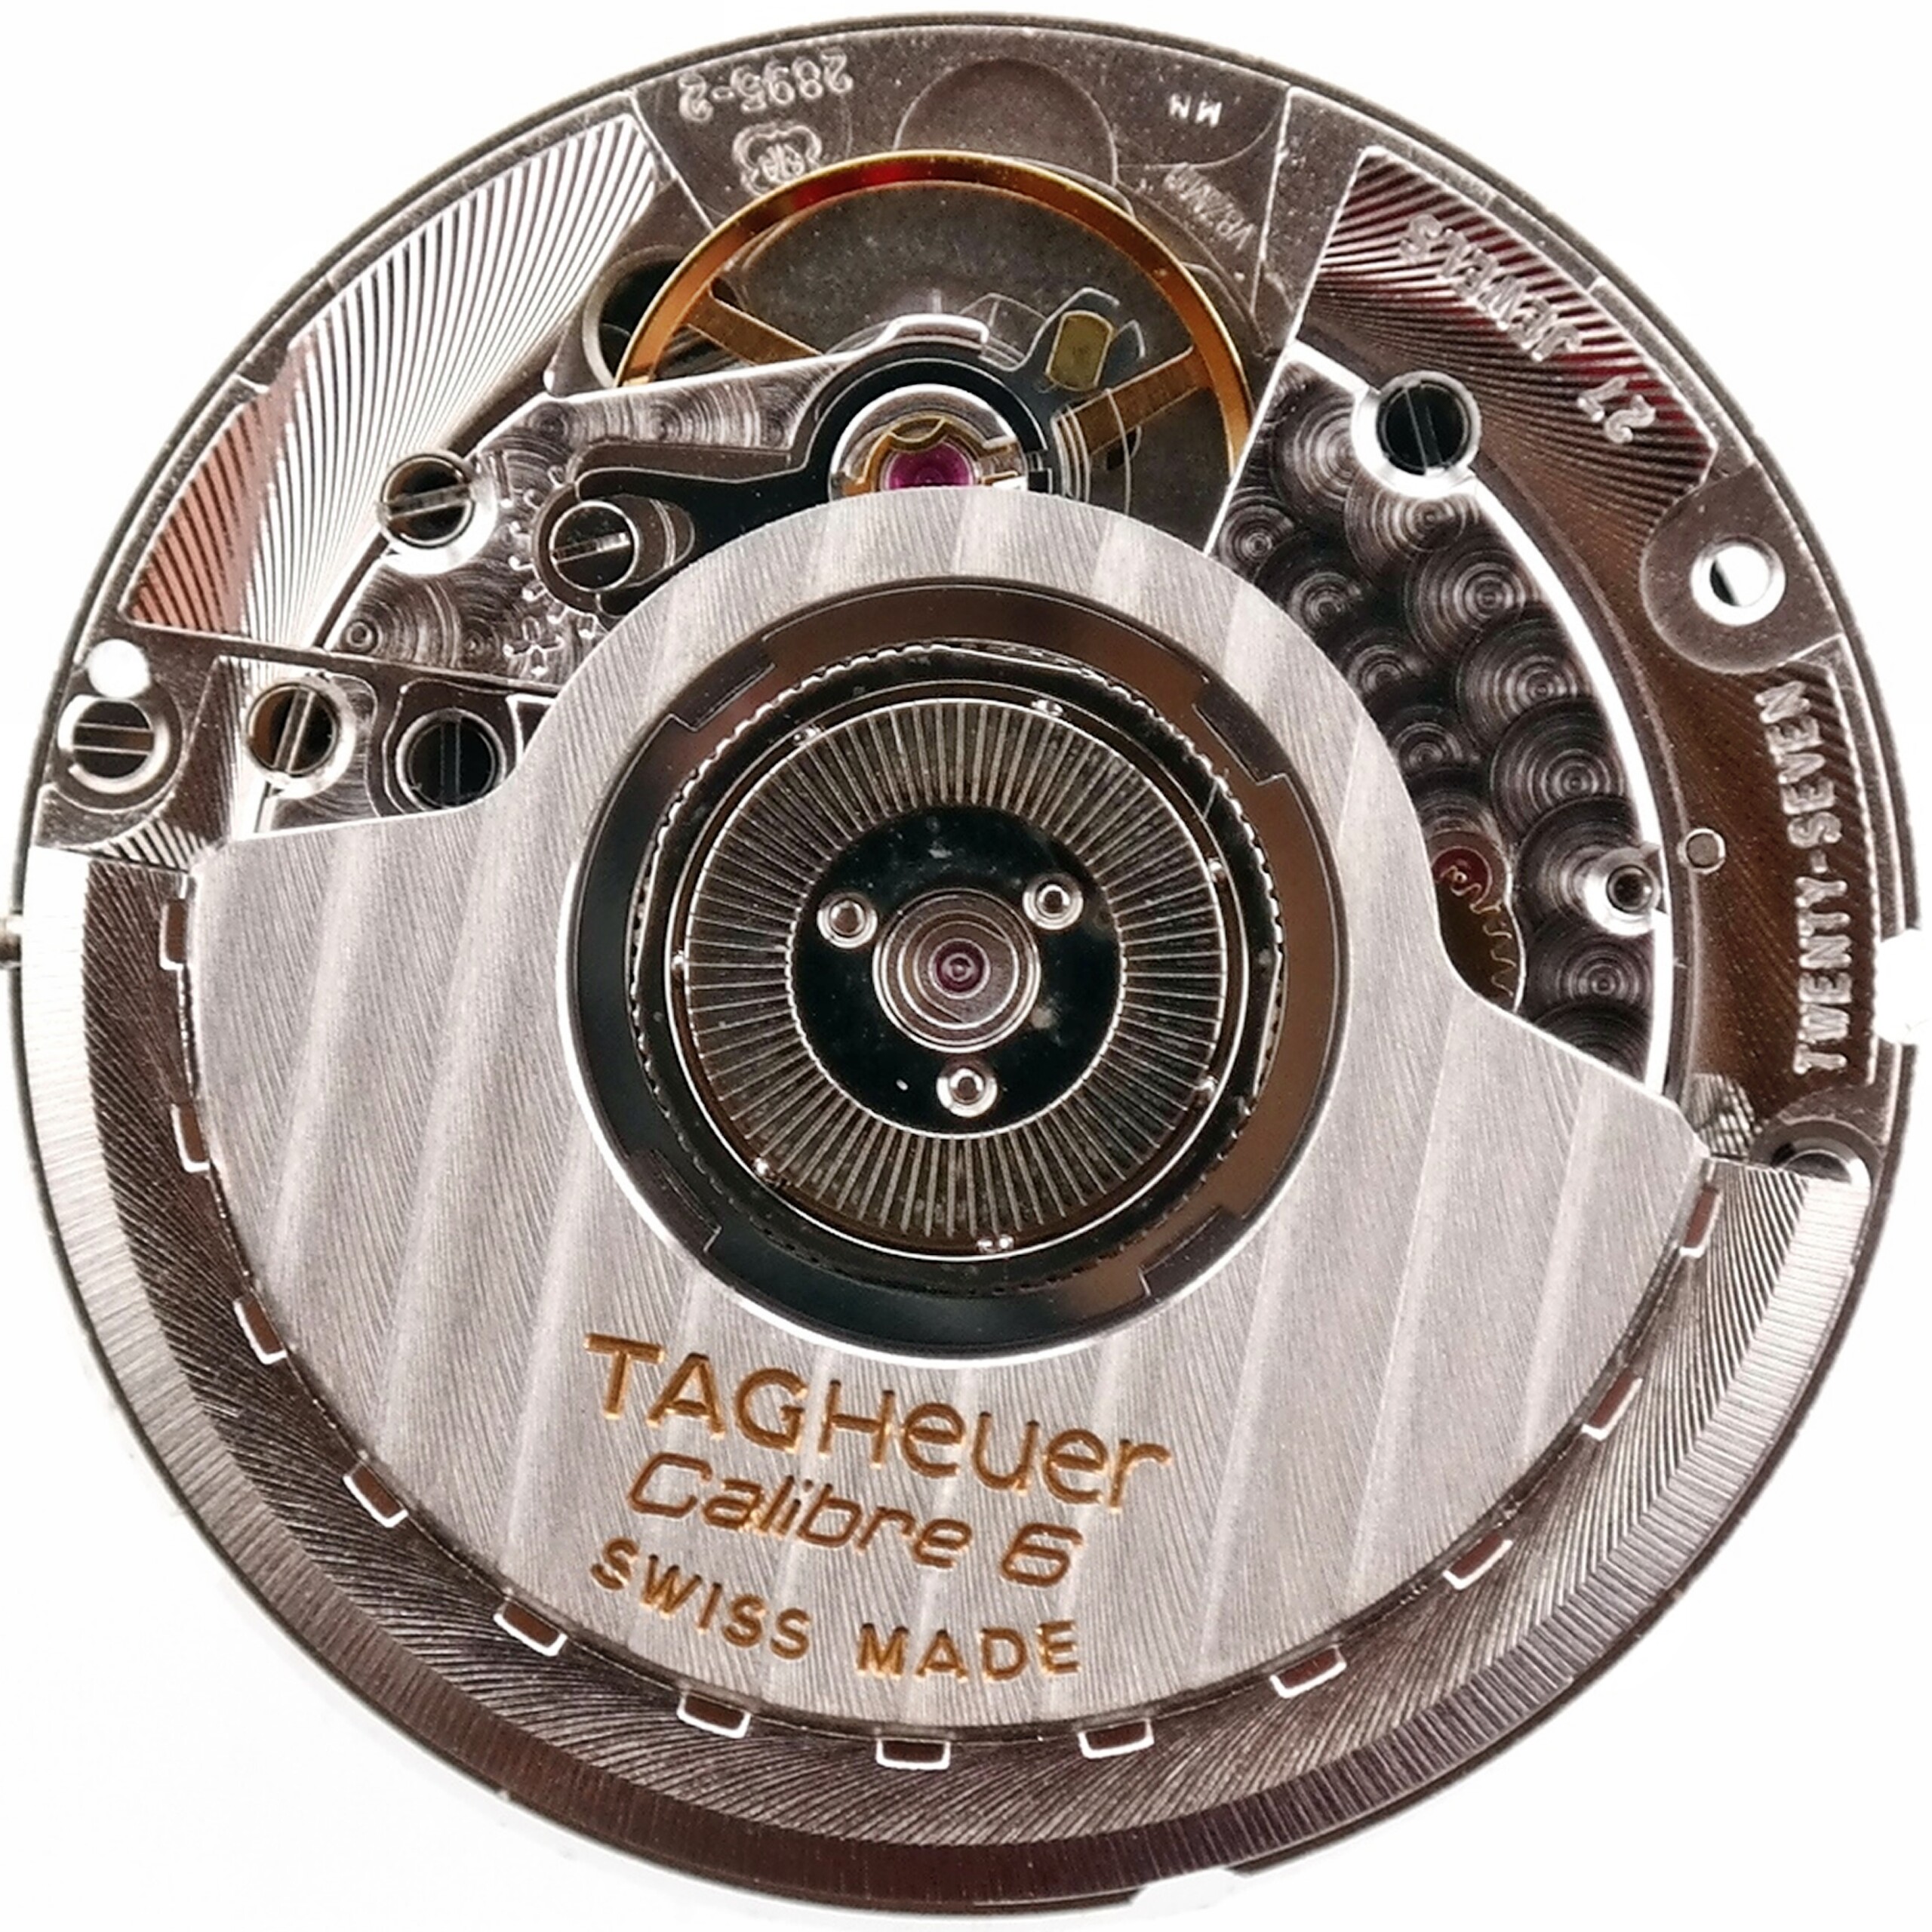 TAG Heuer - Calibre 6 - ETA 2895-2 - Automatic Watch Movement - Small Seconds